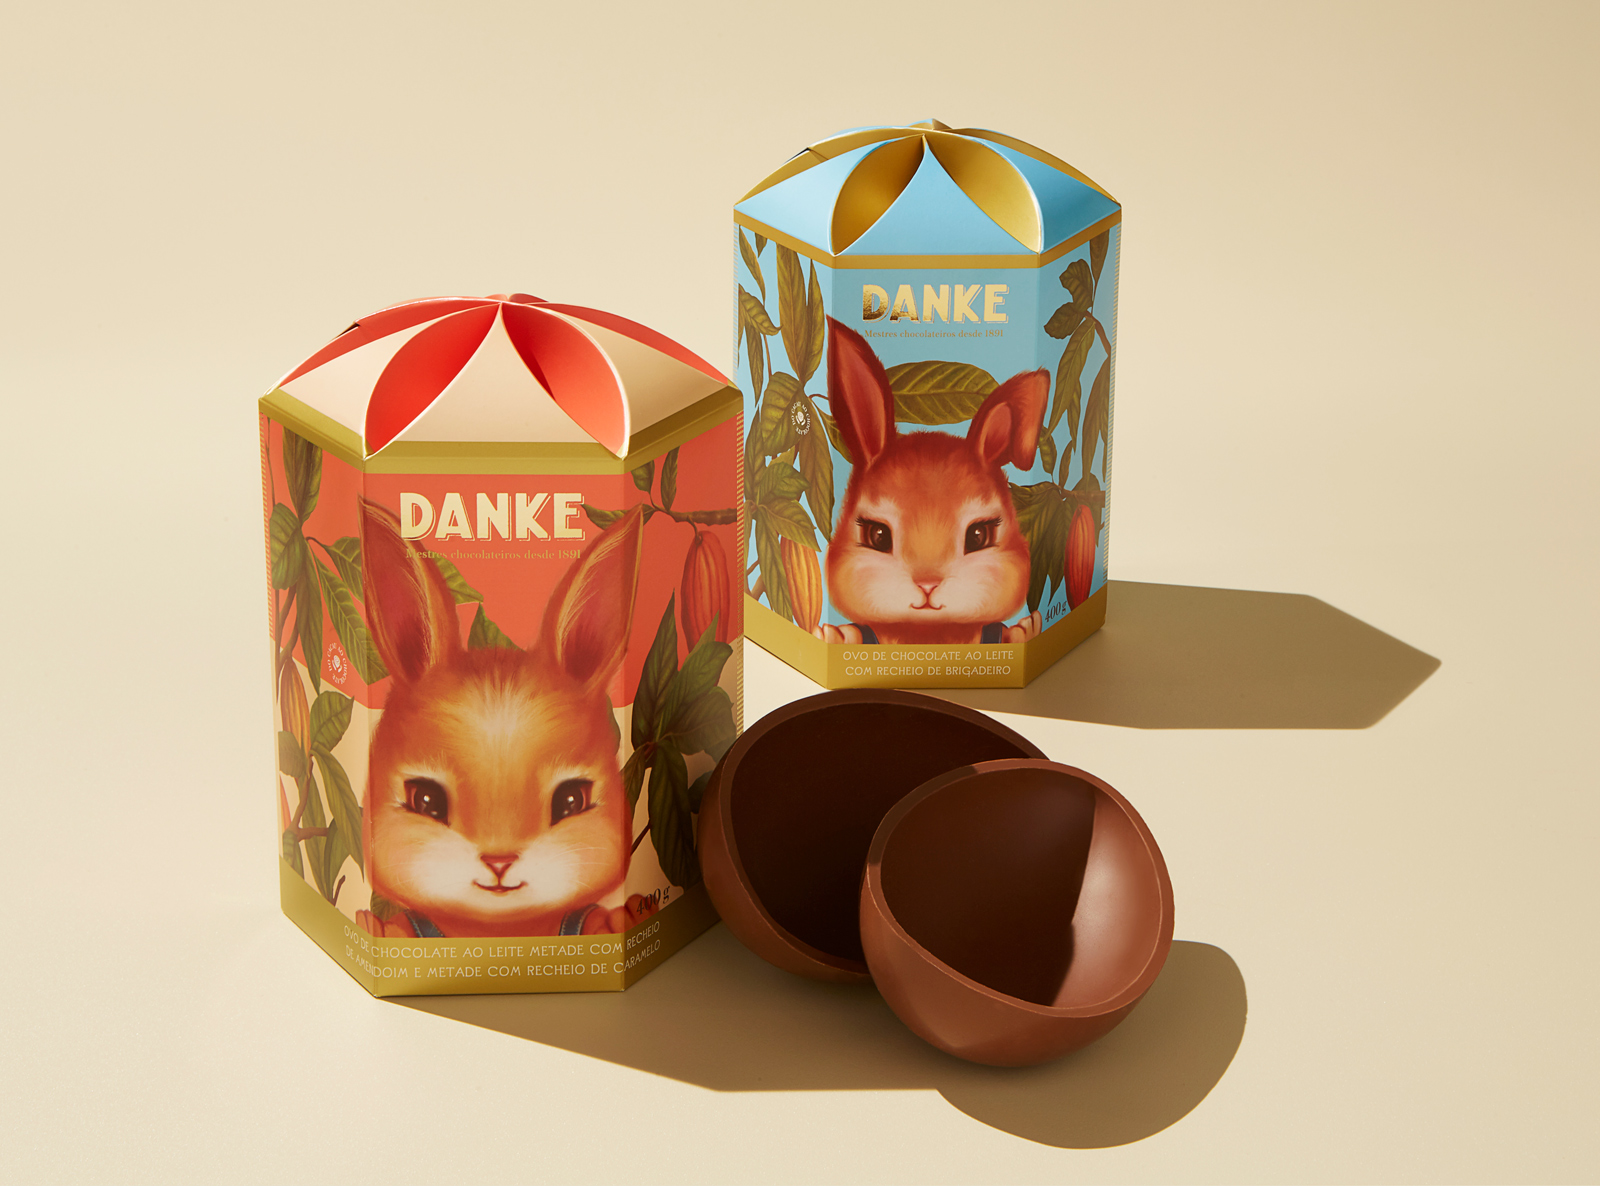 Danke巧克力产品插画风格包装设计欣赏(图6)